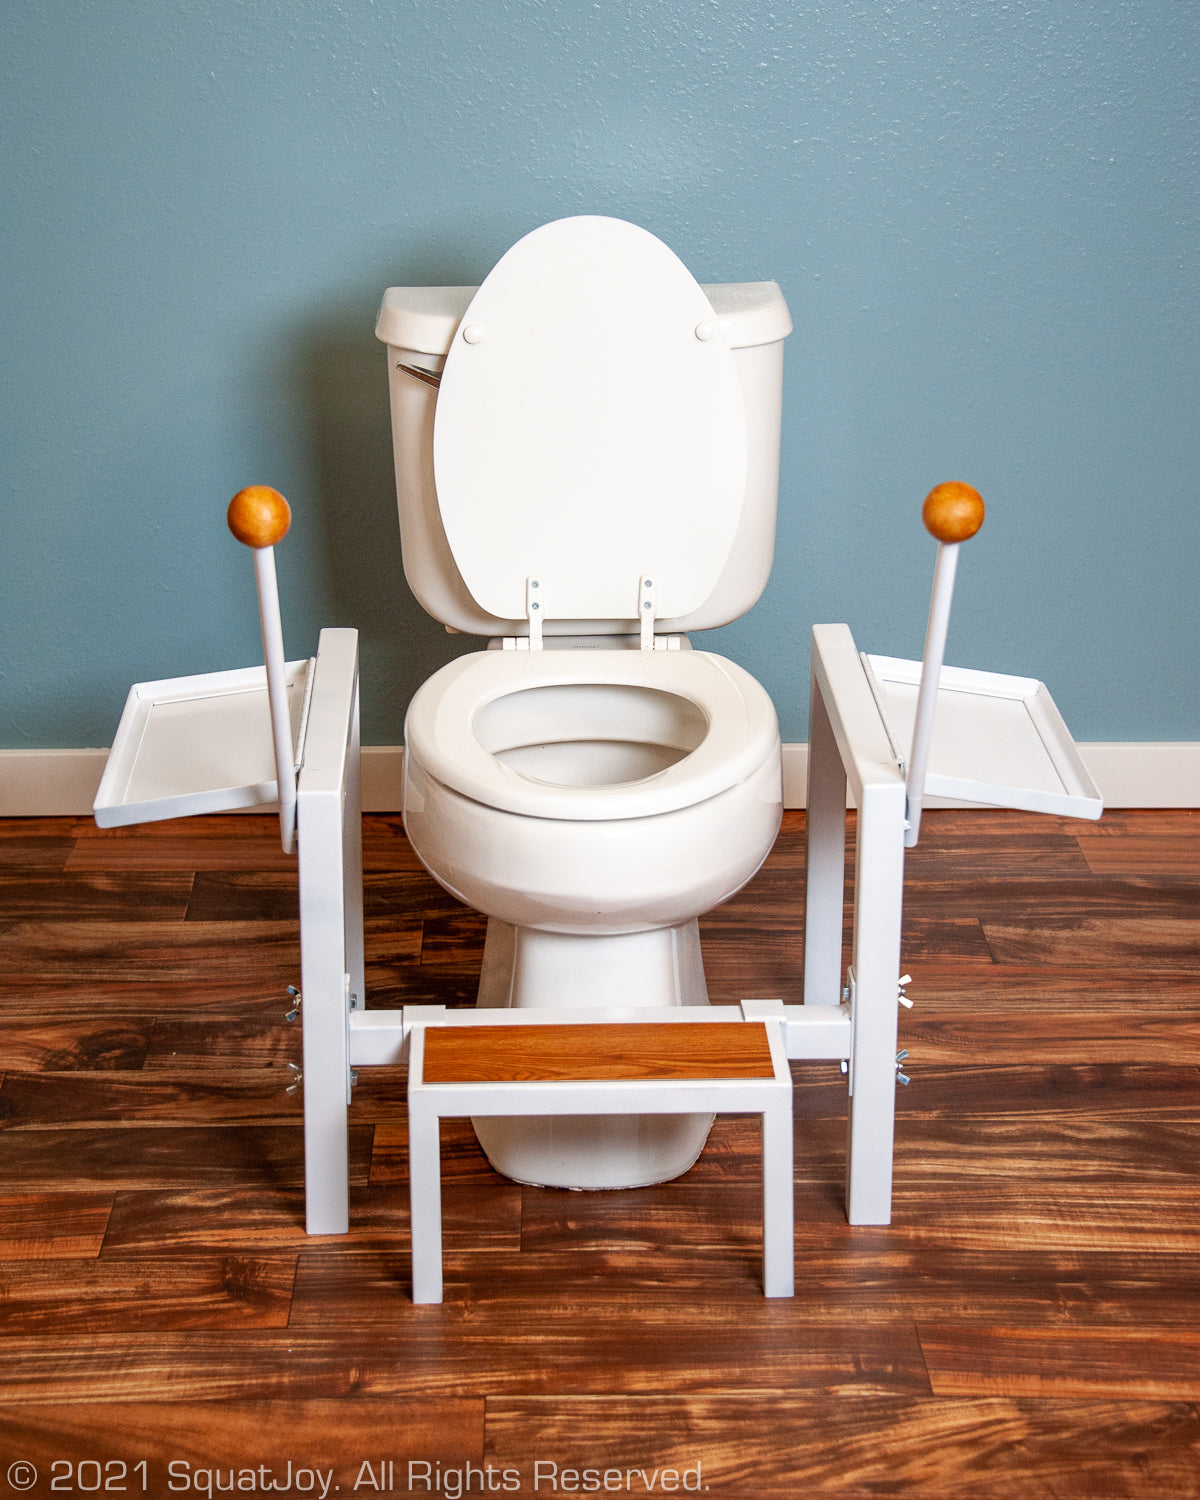 Full-squat toilet seat SquatJoy